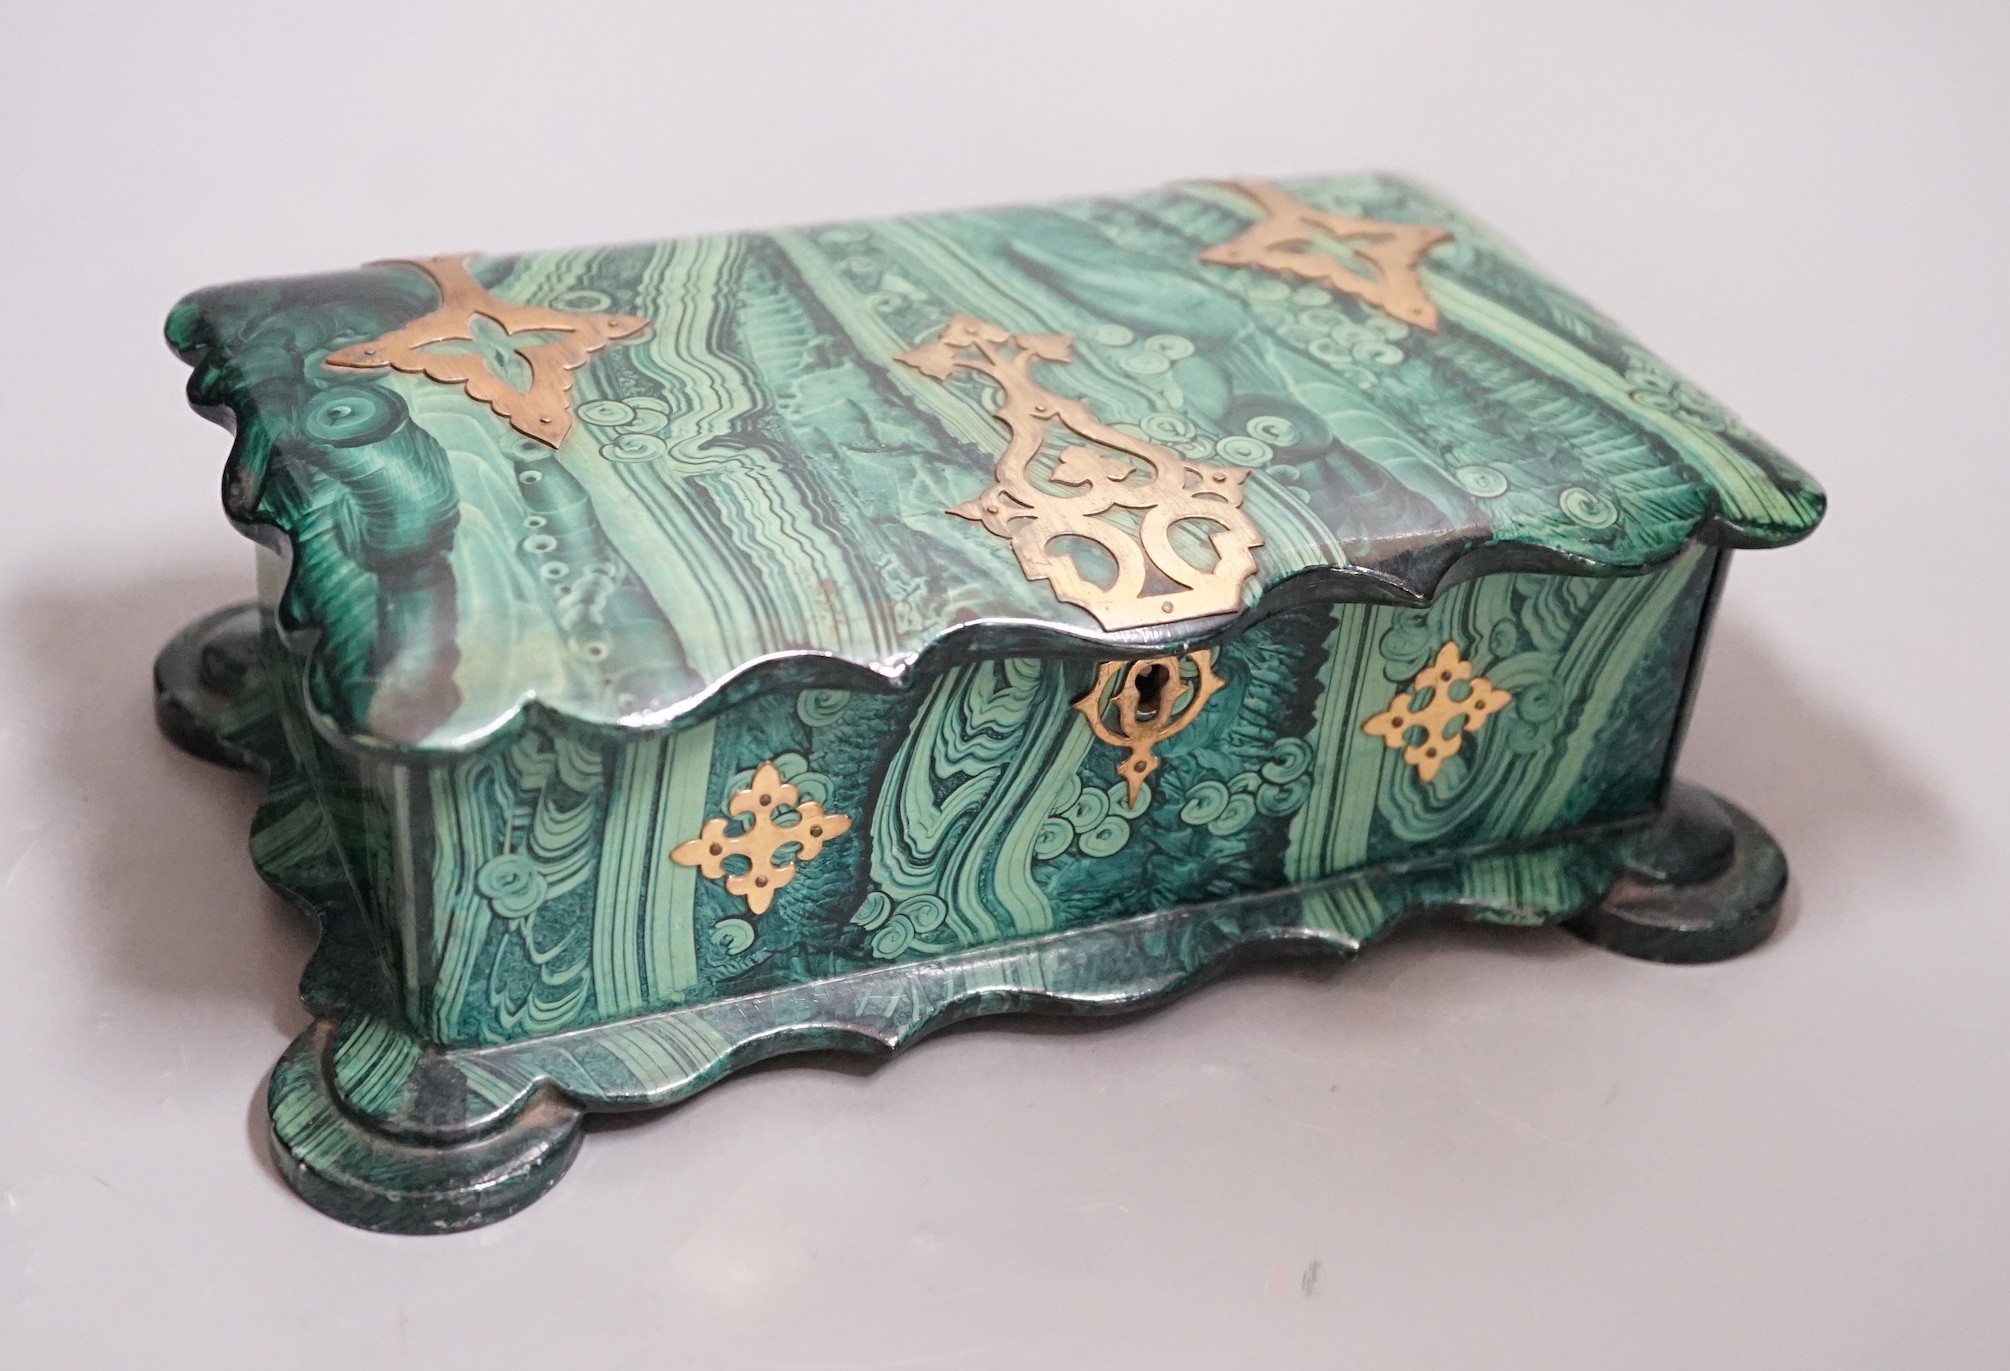 A Victorian papier-mâché-mache faux malachite, brass mounted jewellery box, 21cms wide x 12.5cms deep